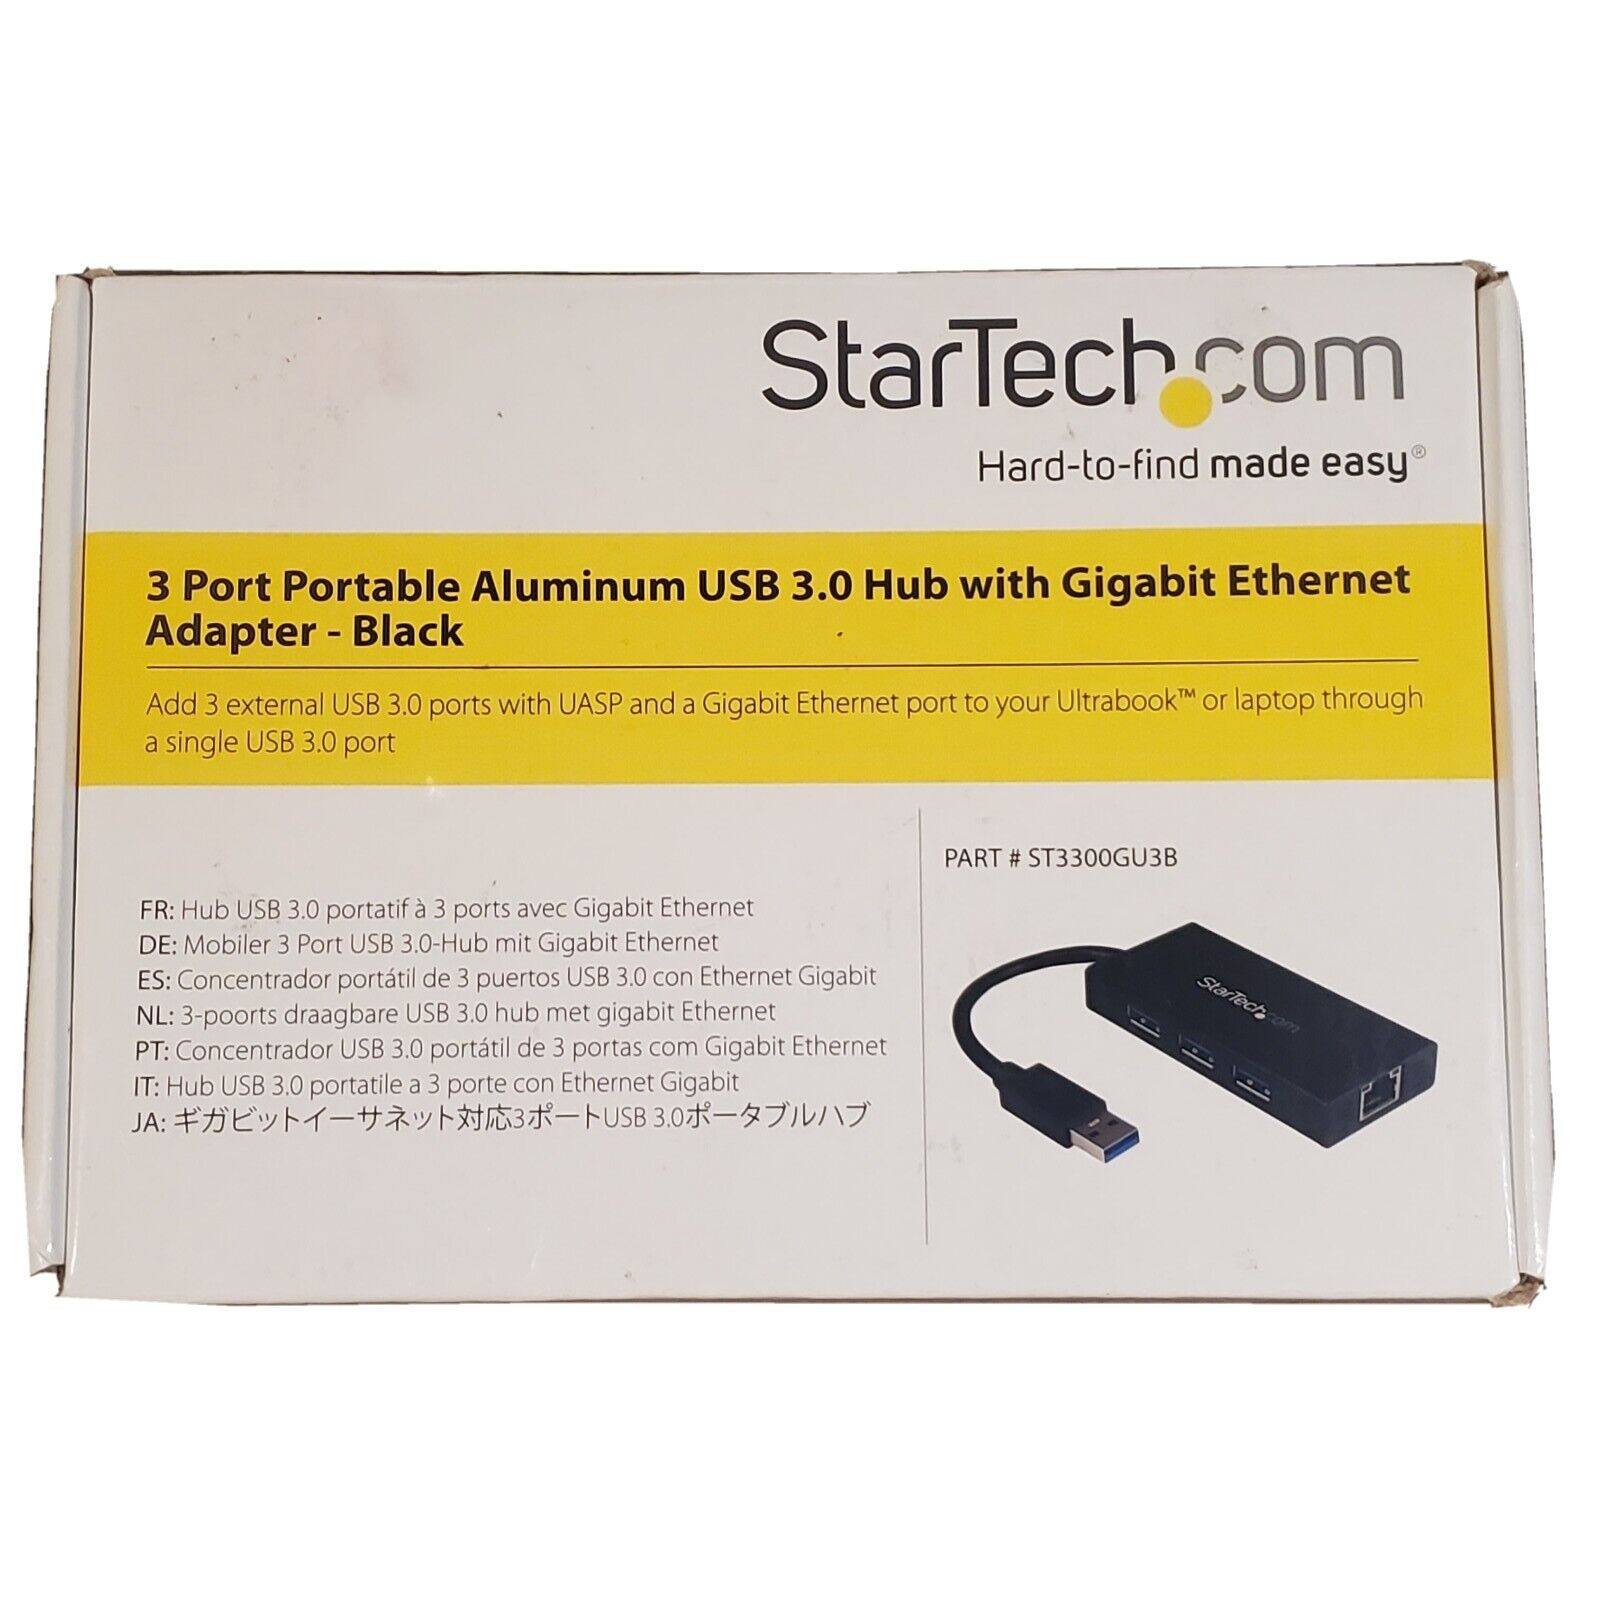 Startech 3 Port Portable USB 3.0 Hub w/Gigabit Ethernet Adapter ST3300GU3B